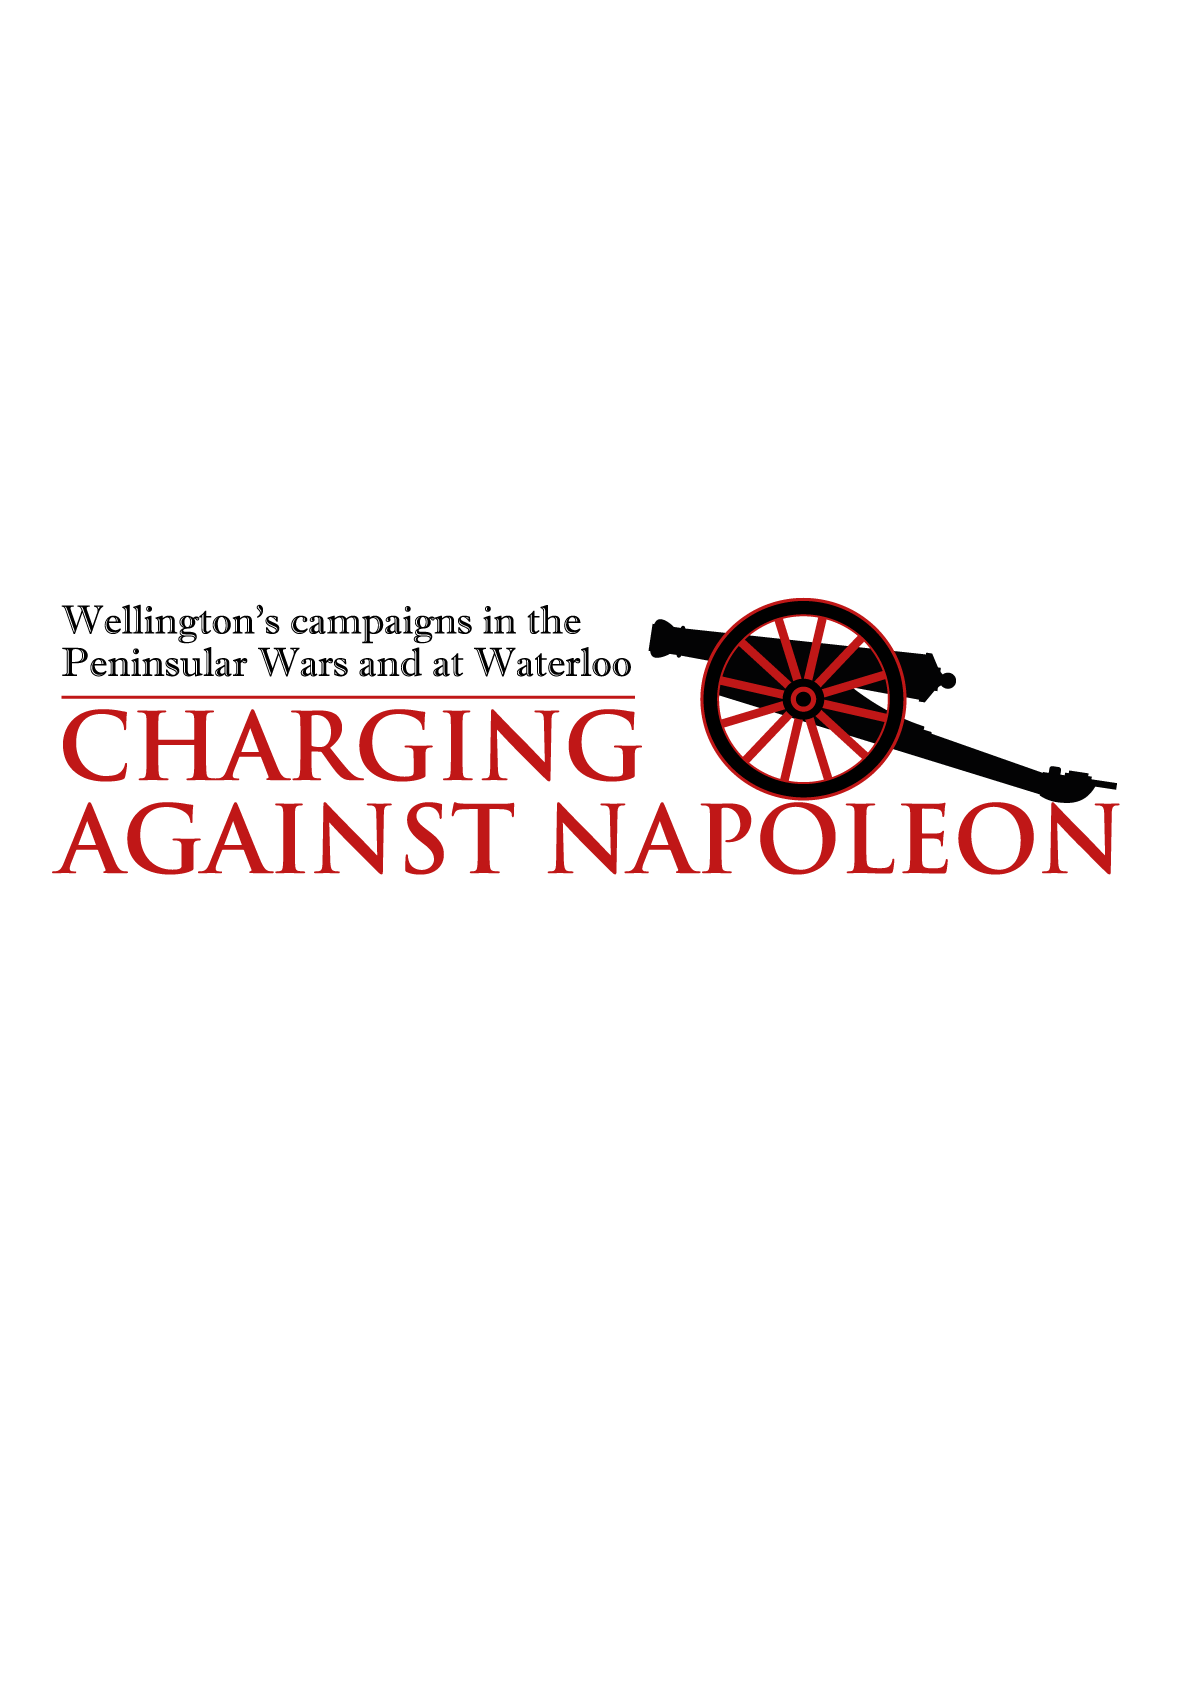 Charging Logo - Charging Logo Full News Room